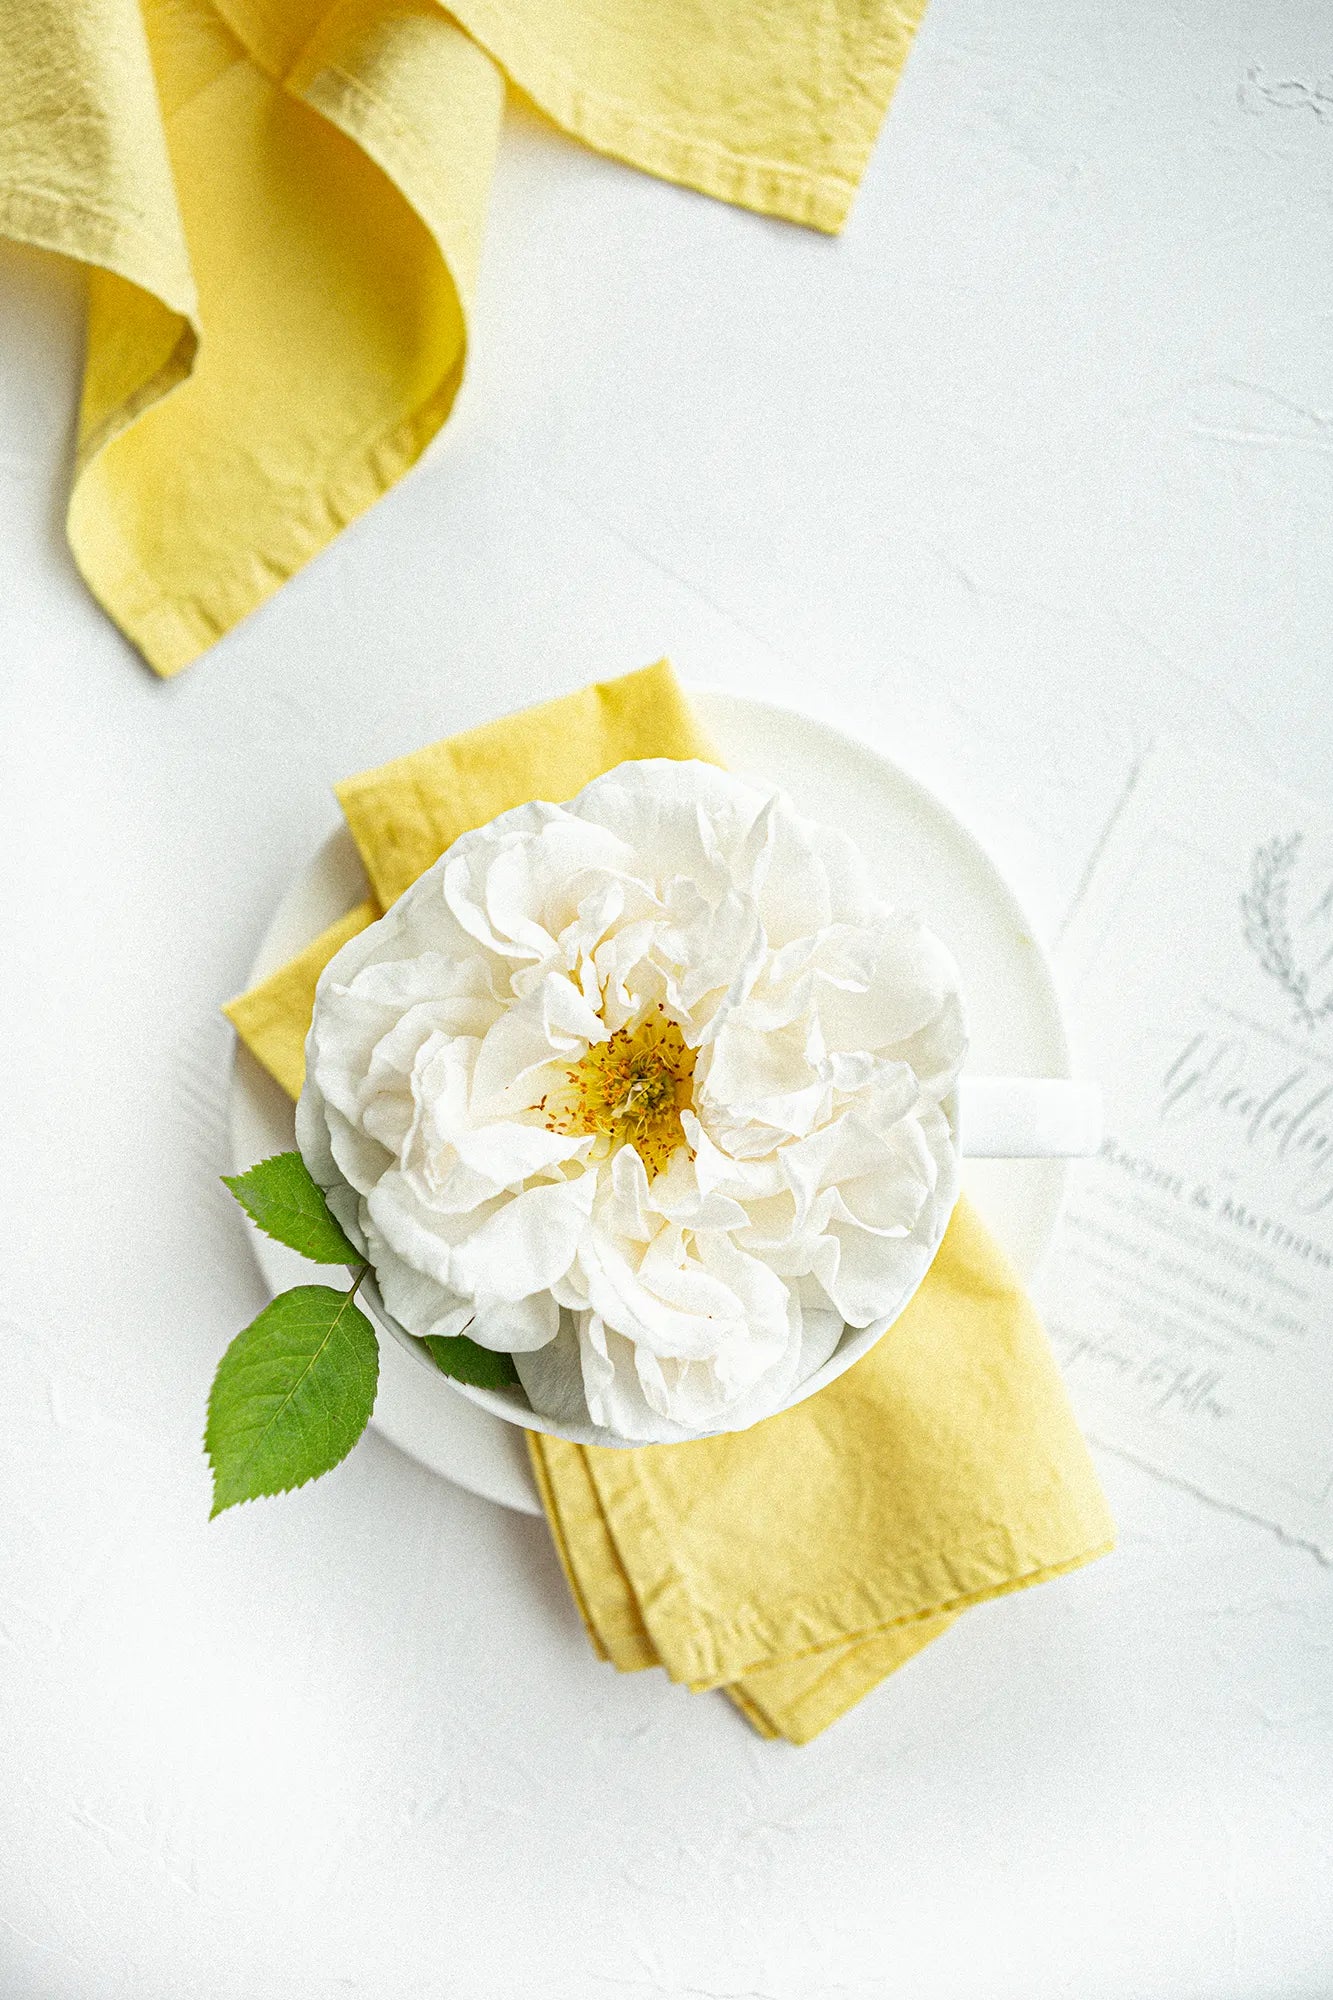 yellow handmade napkins for tea table serving